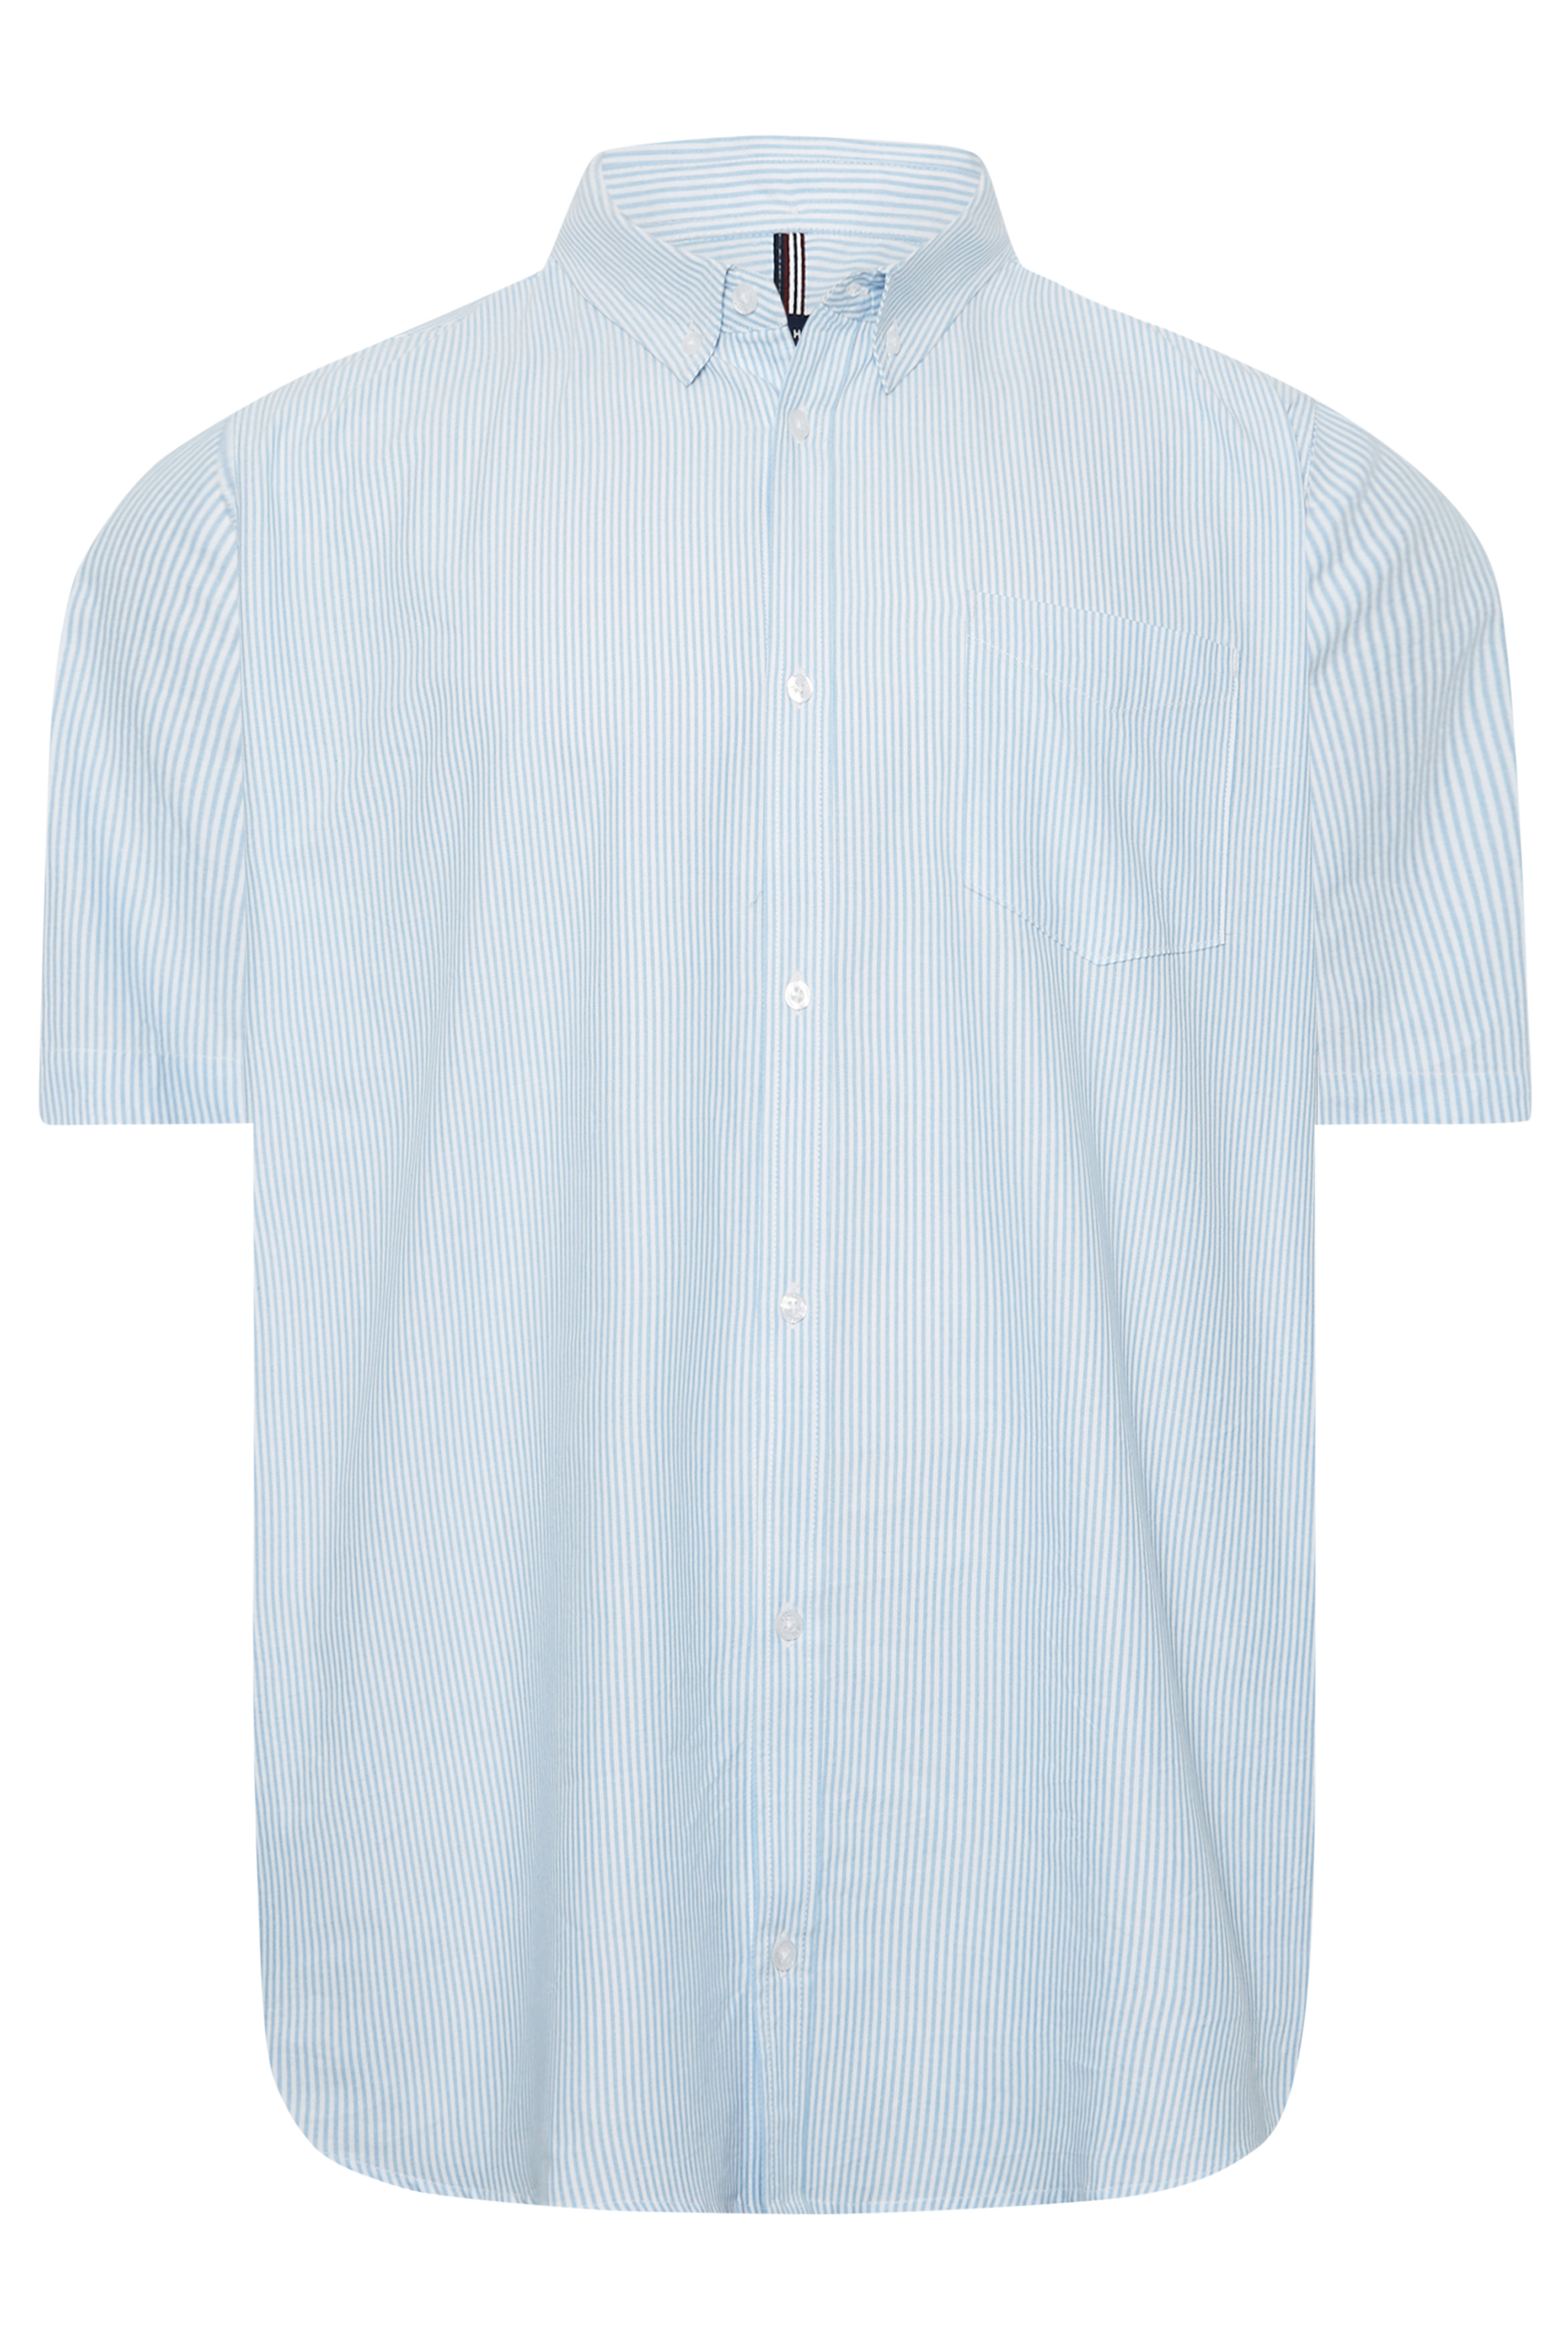 BadRhino Light Blue Stripe Oxford Shirt | BadRhino 3